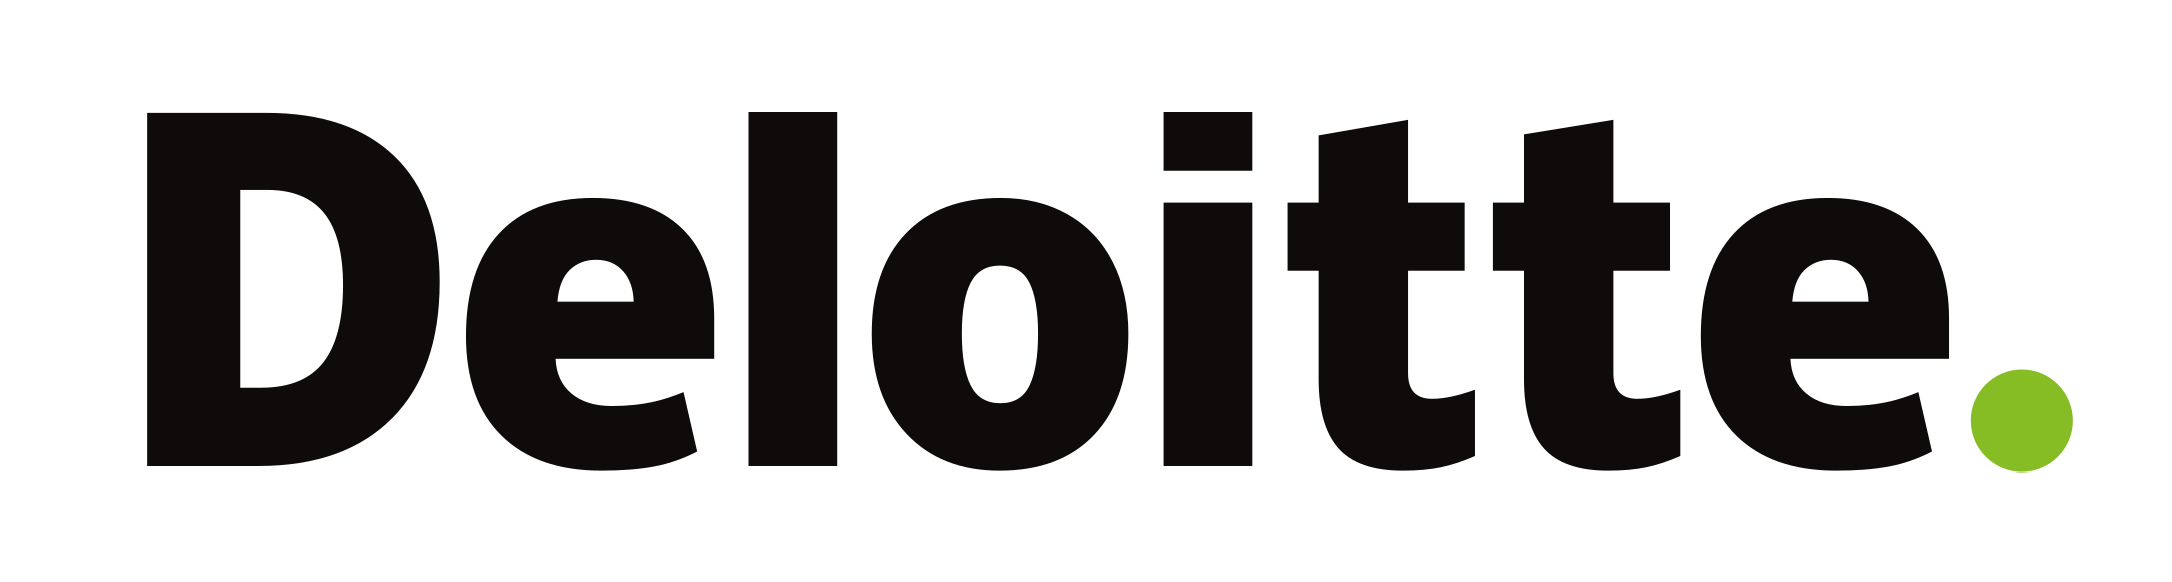 Deloitte-Logo-e1505158716925.png